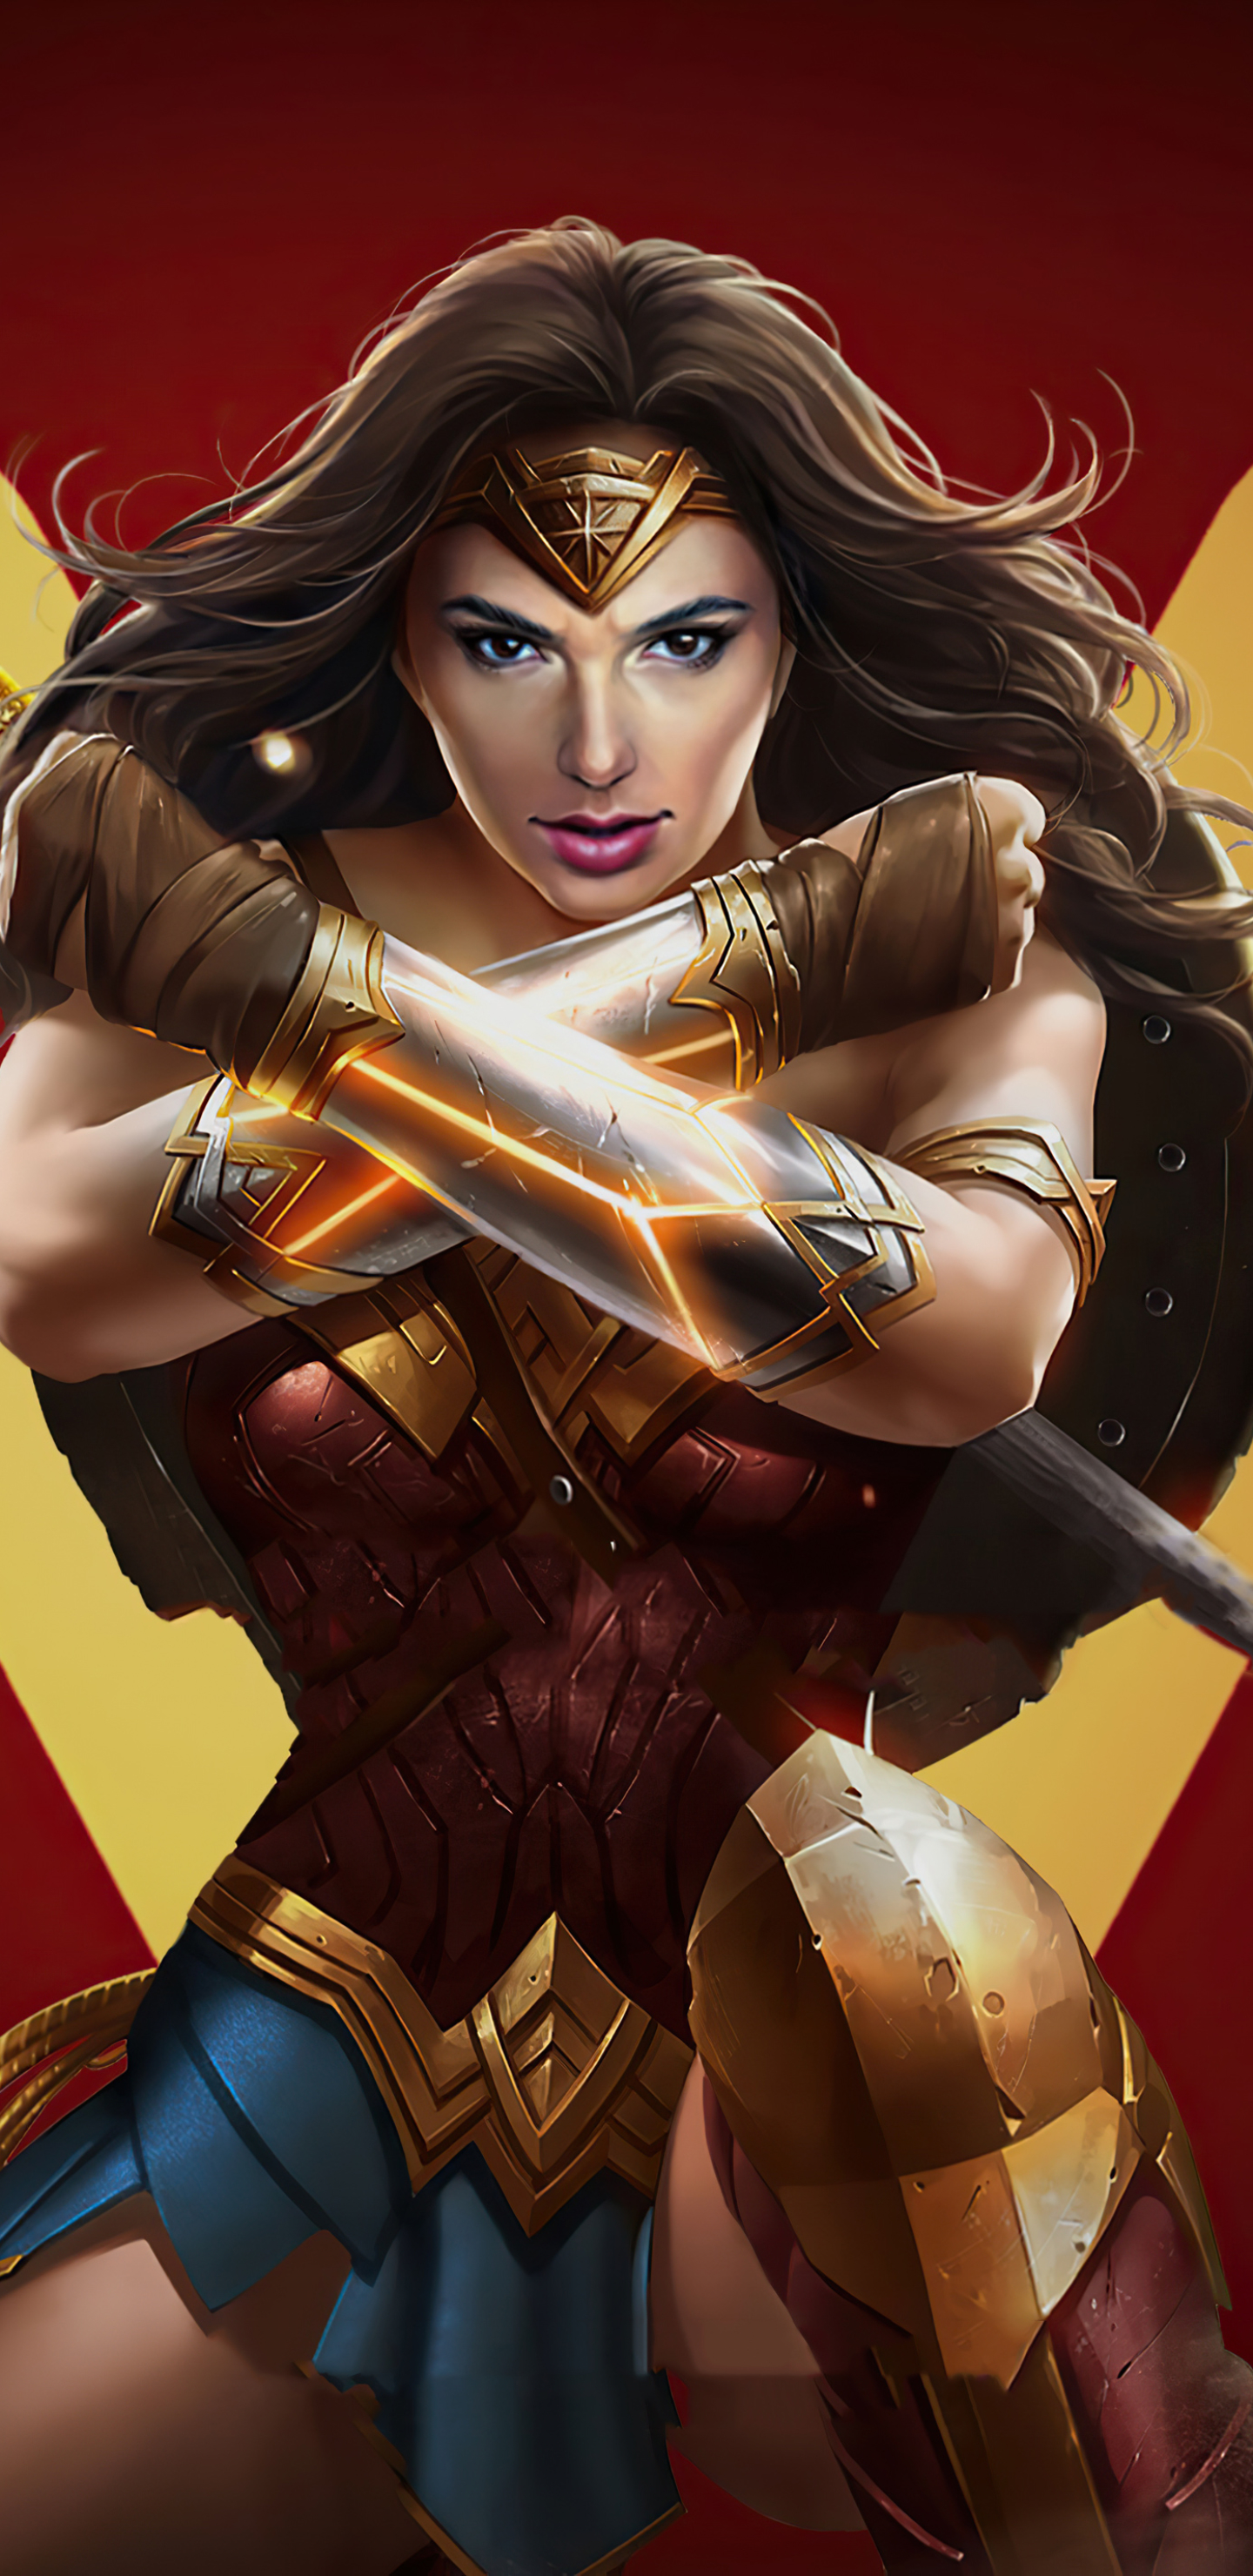 Handy-Wallpaper Krieger, Filme, Dc Comics, Diana Prinz, Wonderwoman, Gal Gadot, Wonder Woman kostenlos herunterladen.